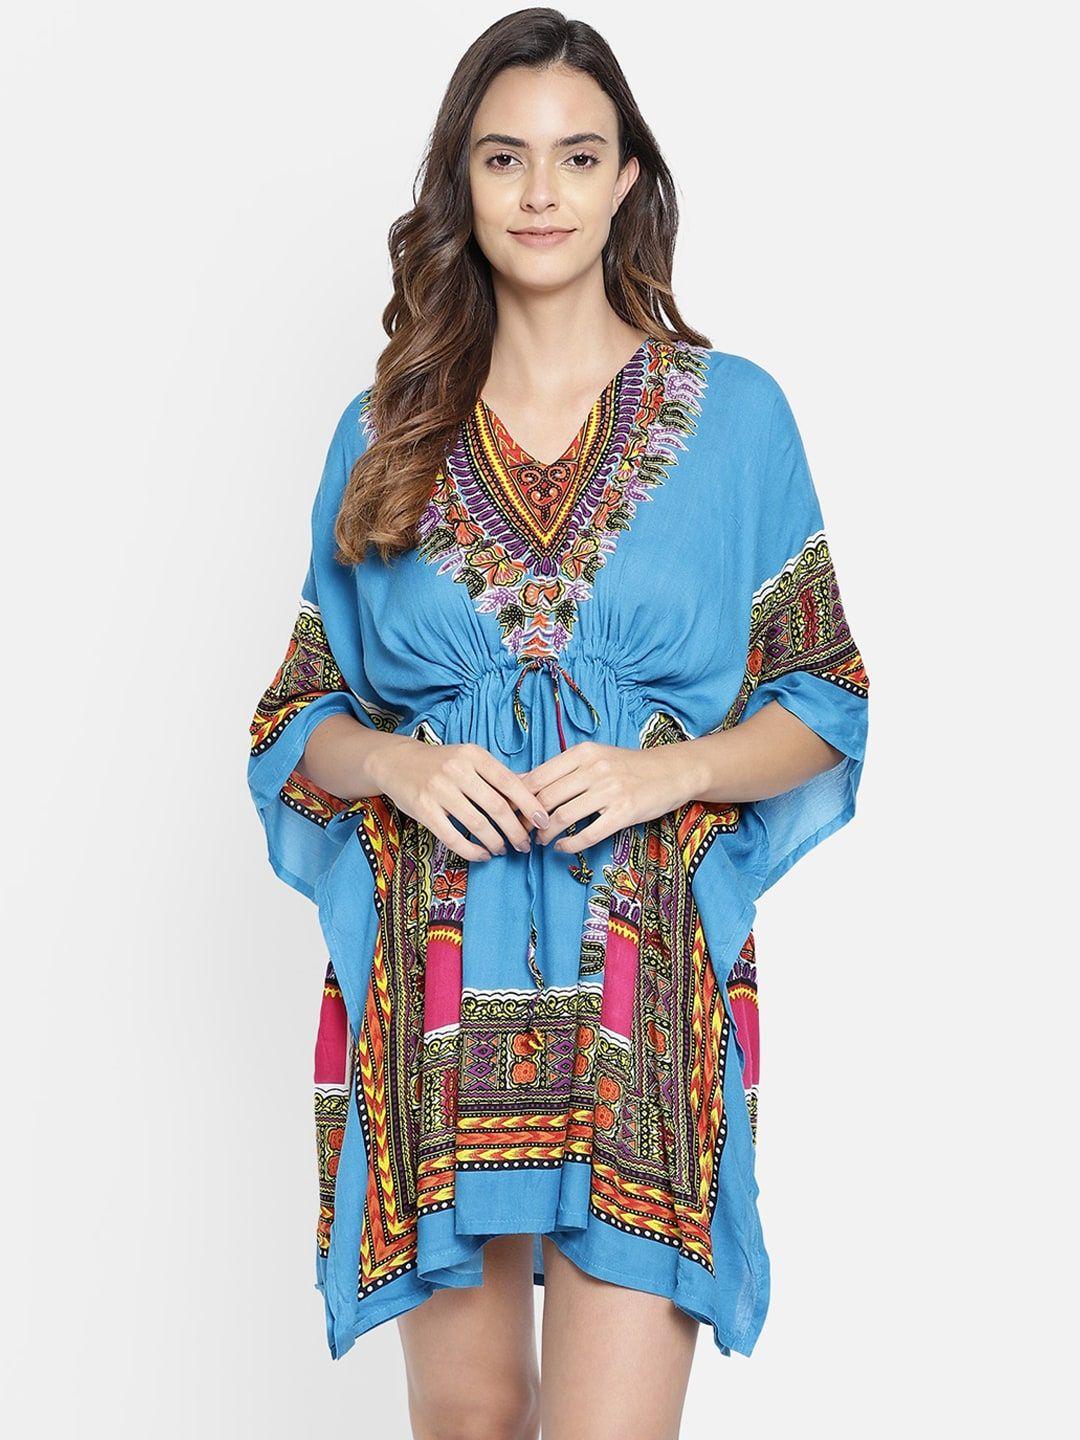 aditi-wasan-turquoise-blue-&-purple-ethnic-motifs-kaftan-dress